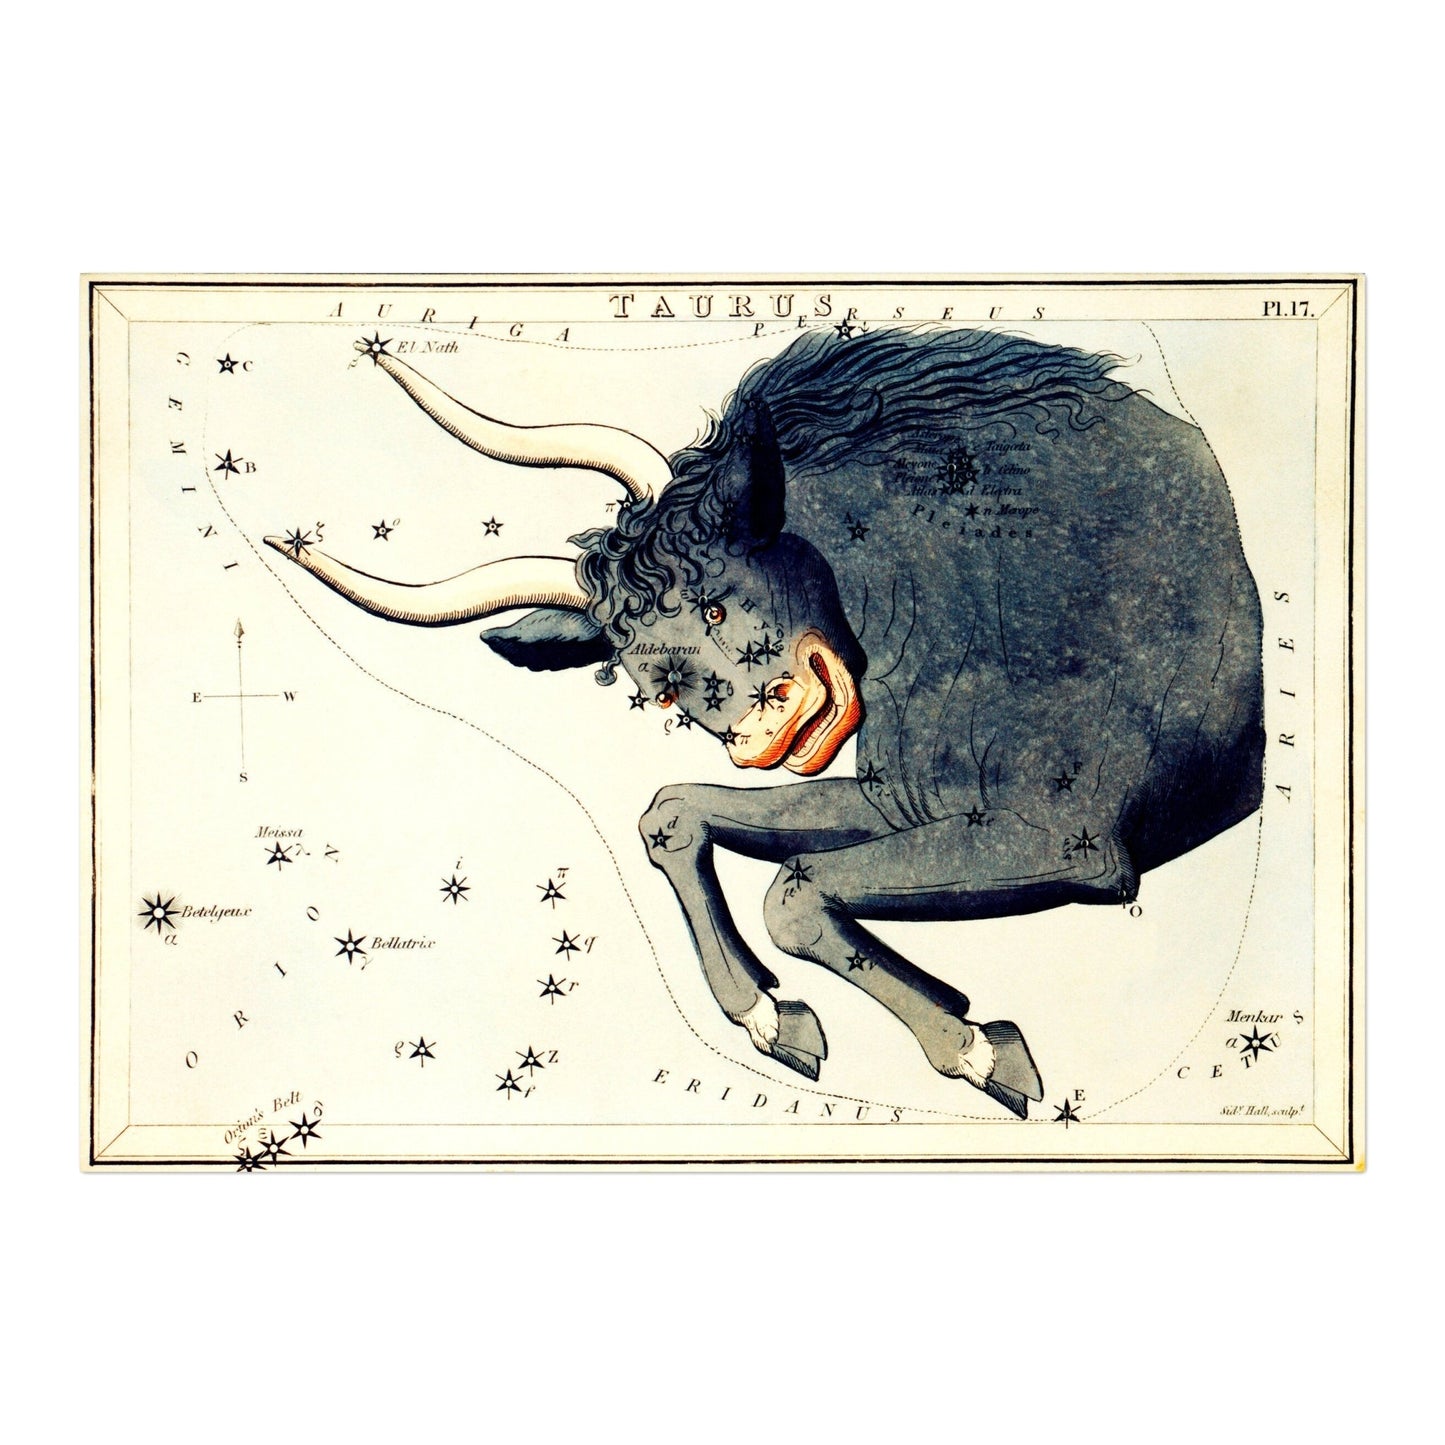 TAURUS - Constellation of a Bull